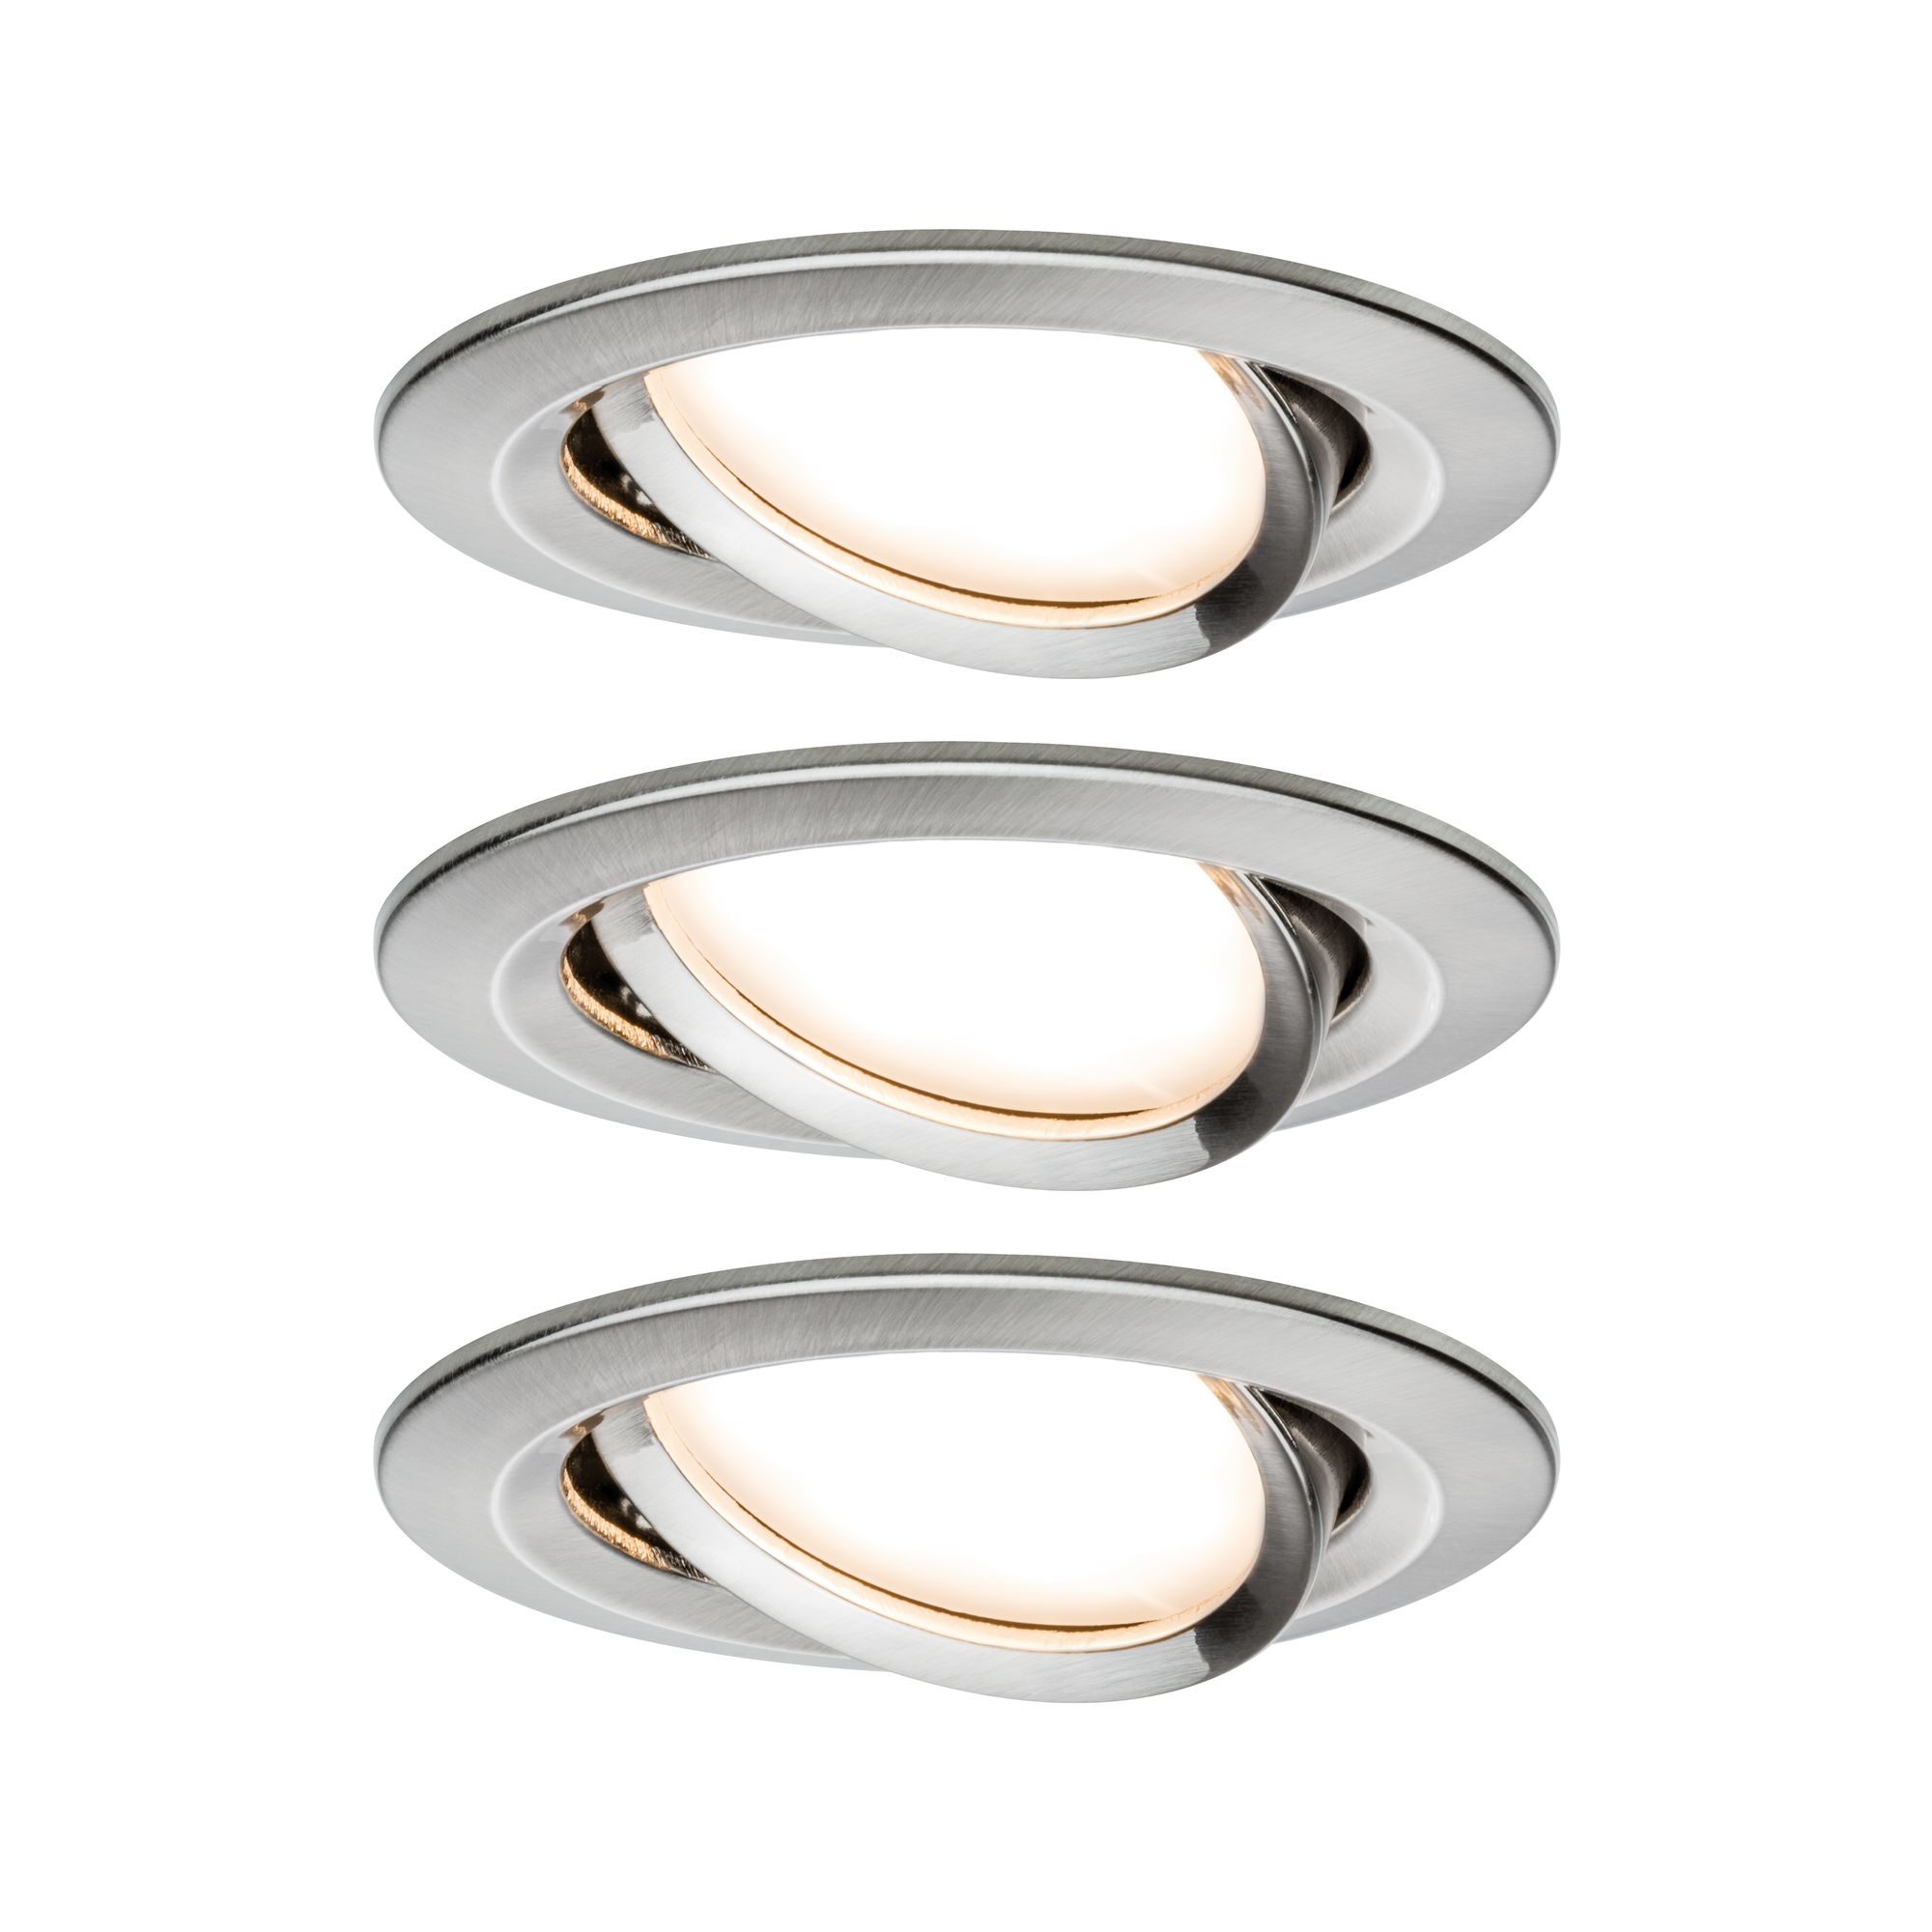 PAULMANN - Vestavné svítidlo LED Nova kruhové 3x6,5W kov kartáčovaný nastavitelné 3-krokové-stmívatelné, P 93483